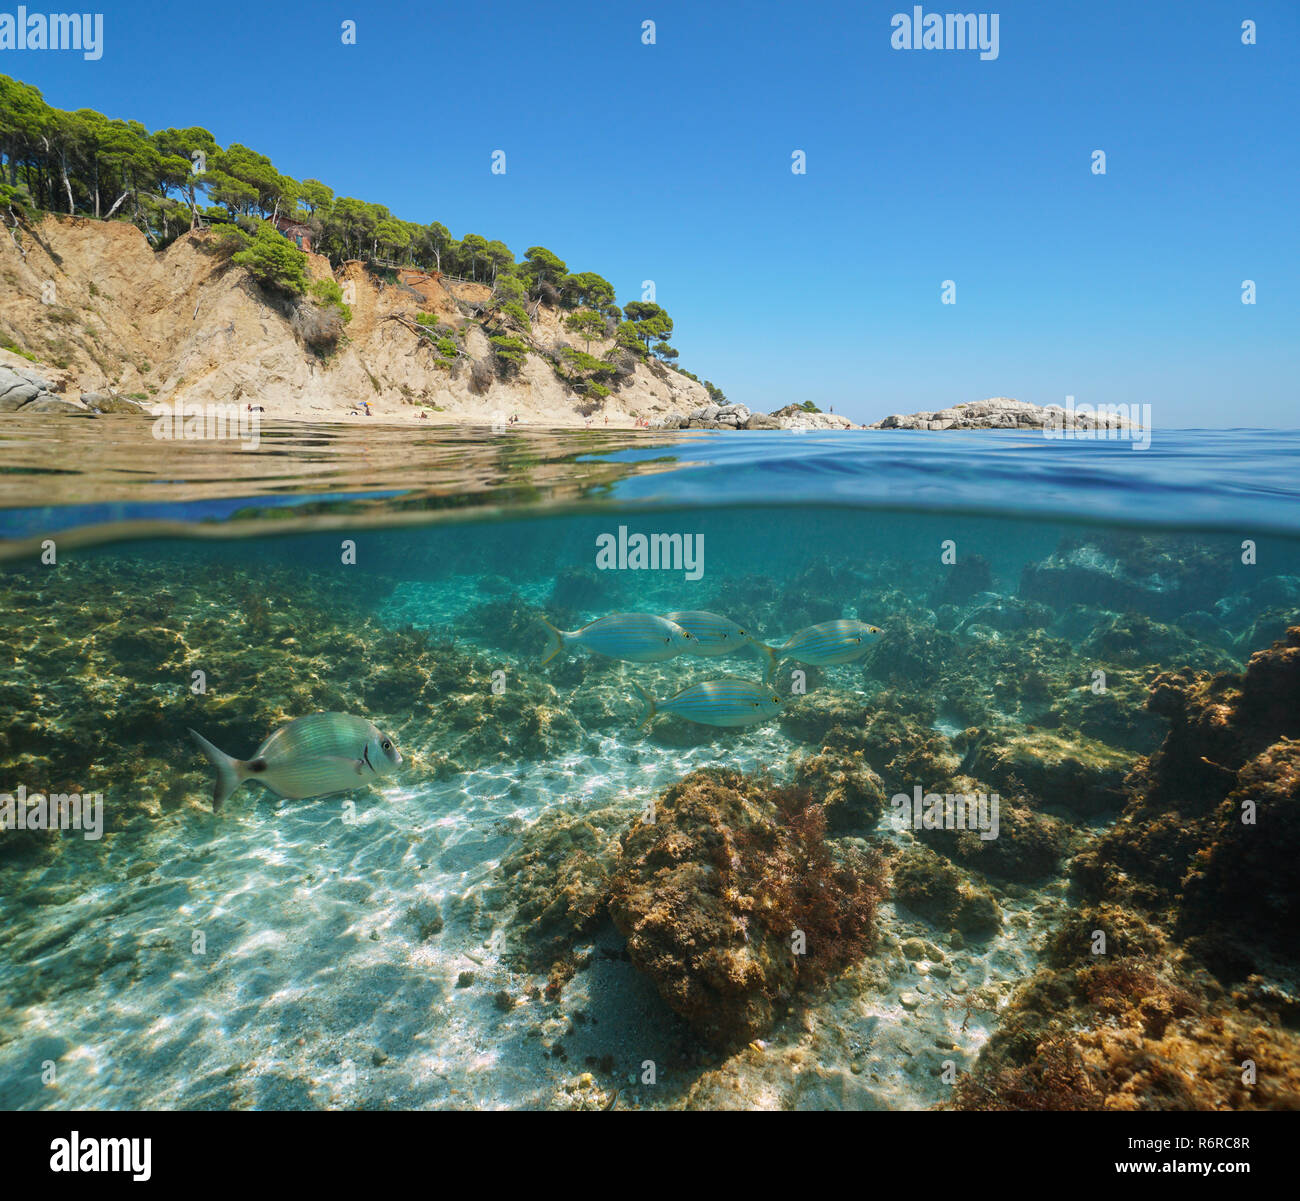 Spain Costa Brava coastline with fish underwater, split view half above and below water surface, Cala Bona, Mediterranean sea, Palamos Stock Photo